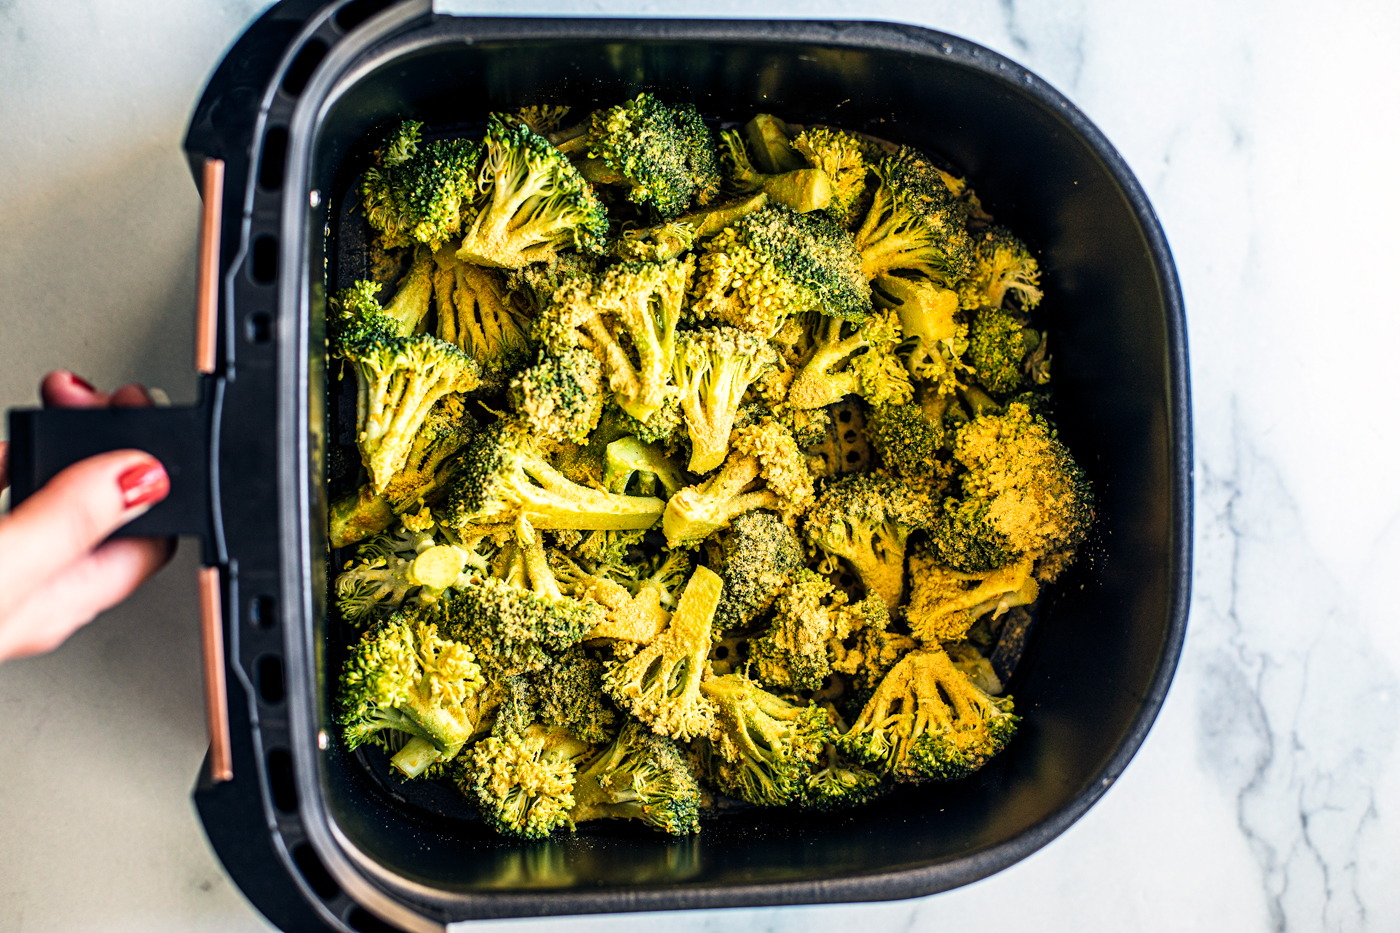 Air fryer basket with seasoned broccoli florets.